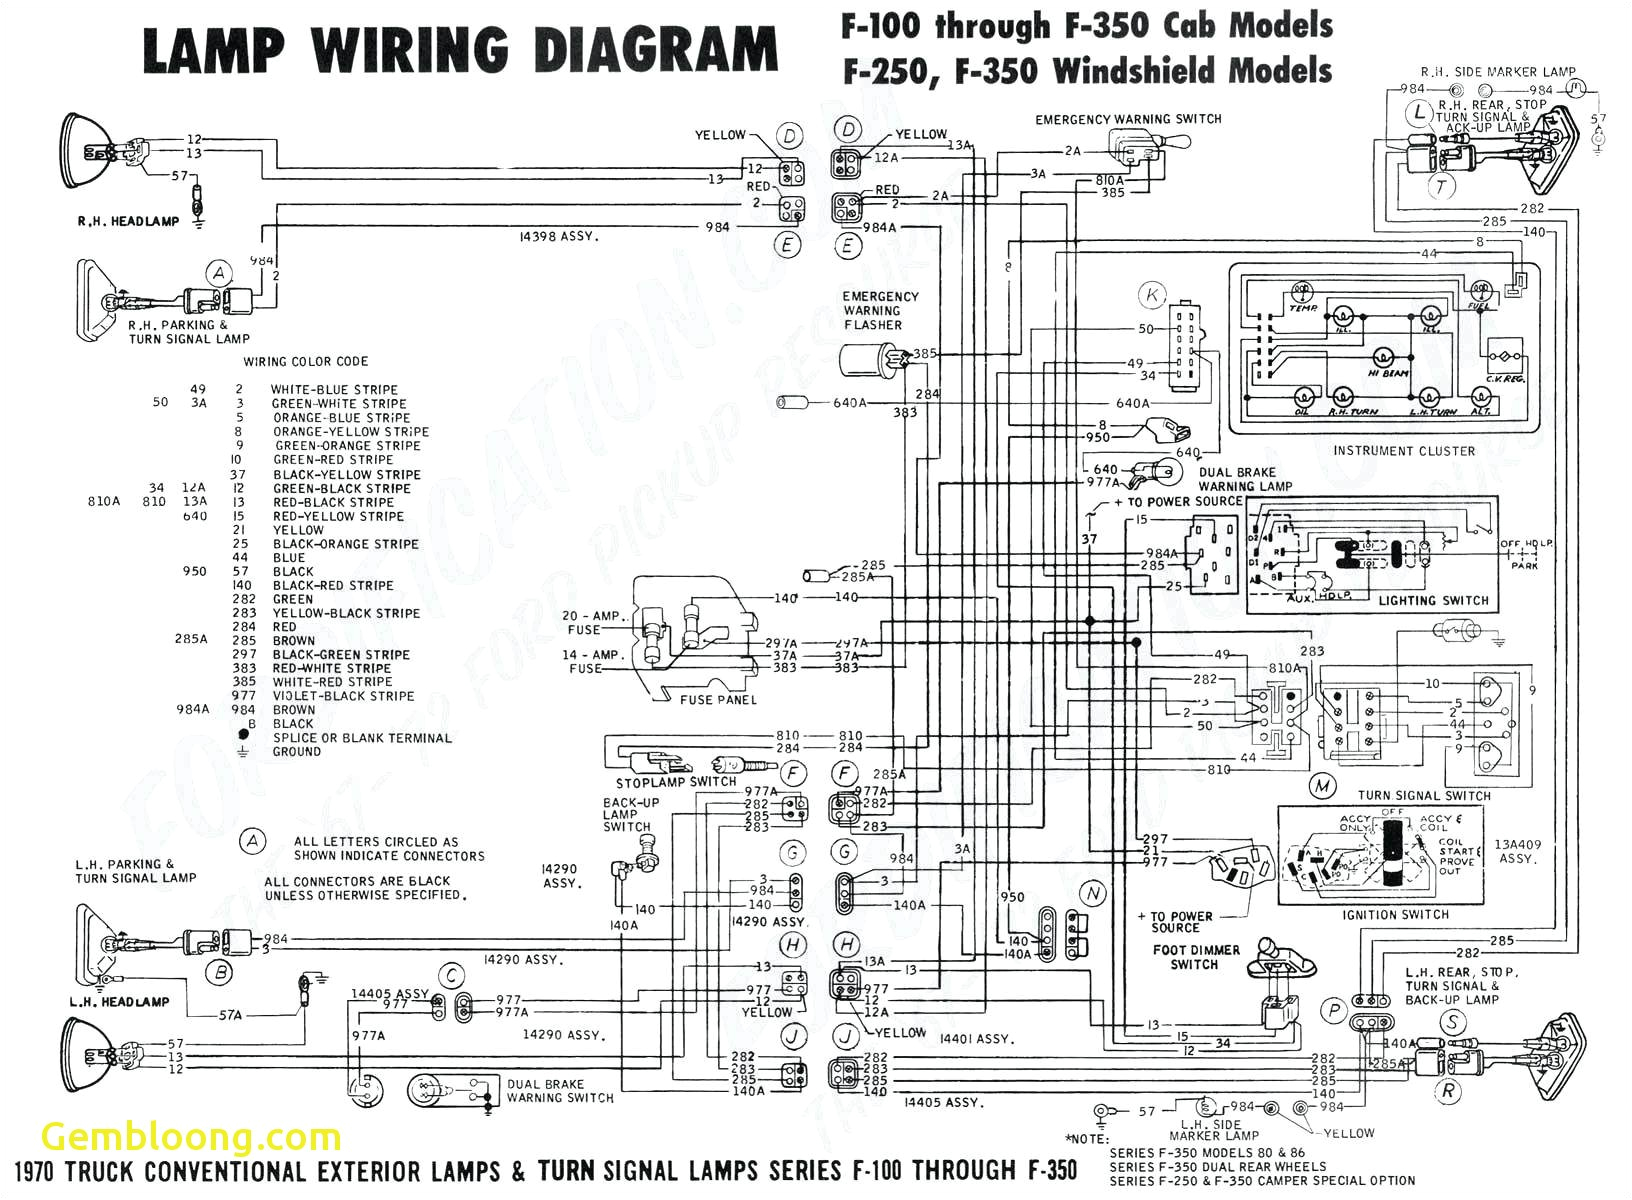 dimmer switch wiring diagram mazda